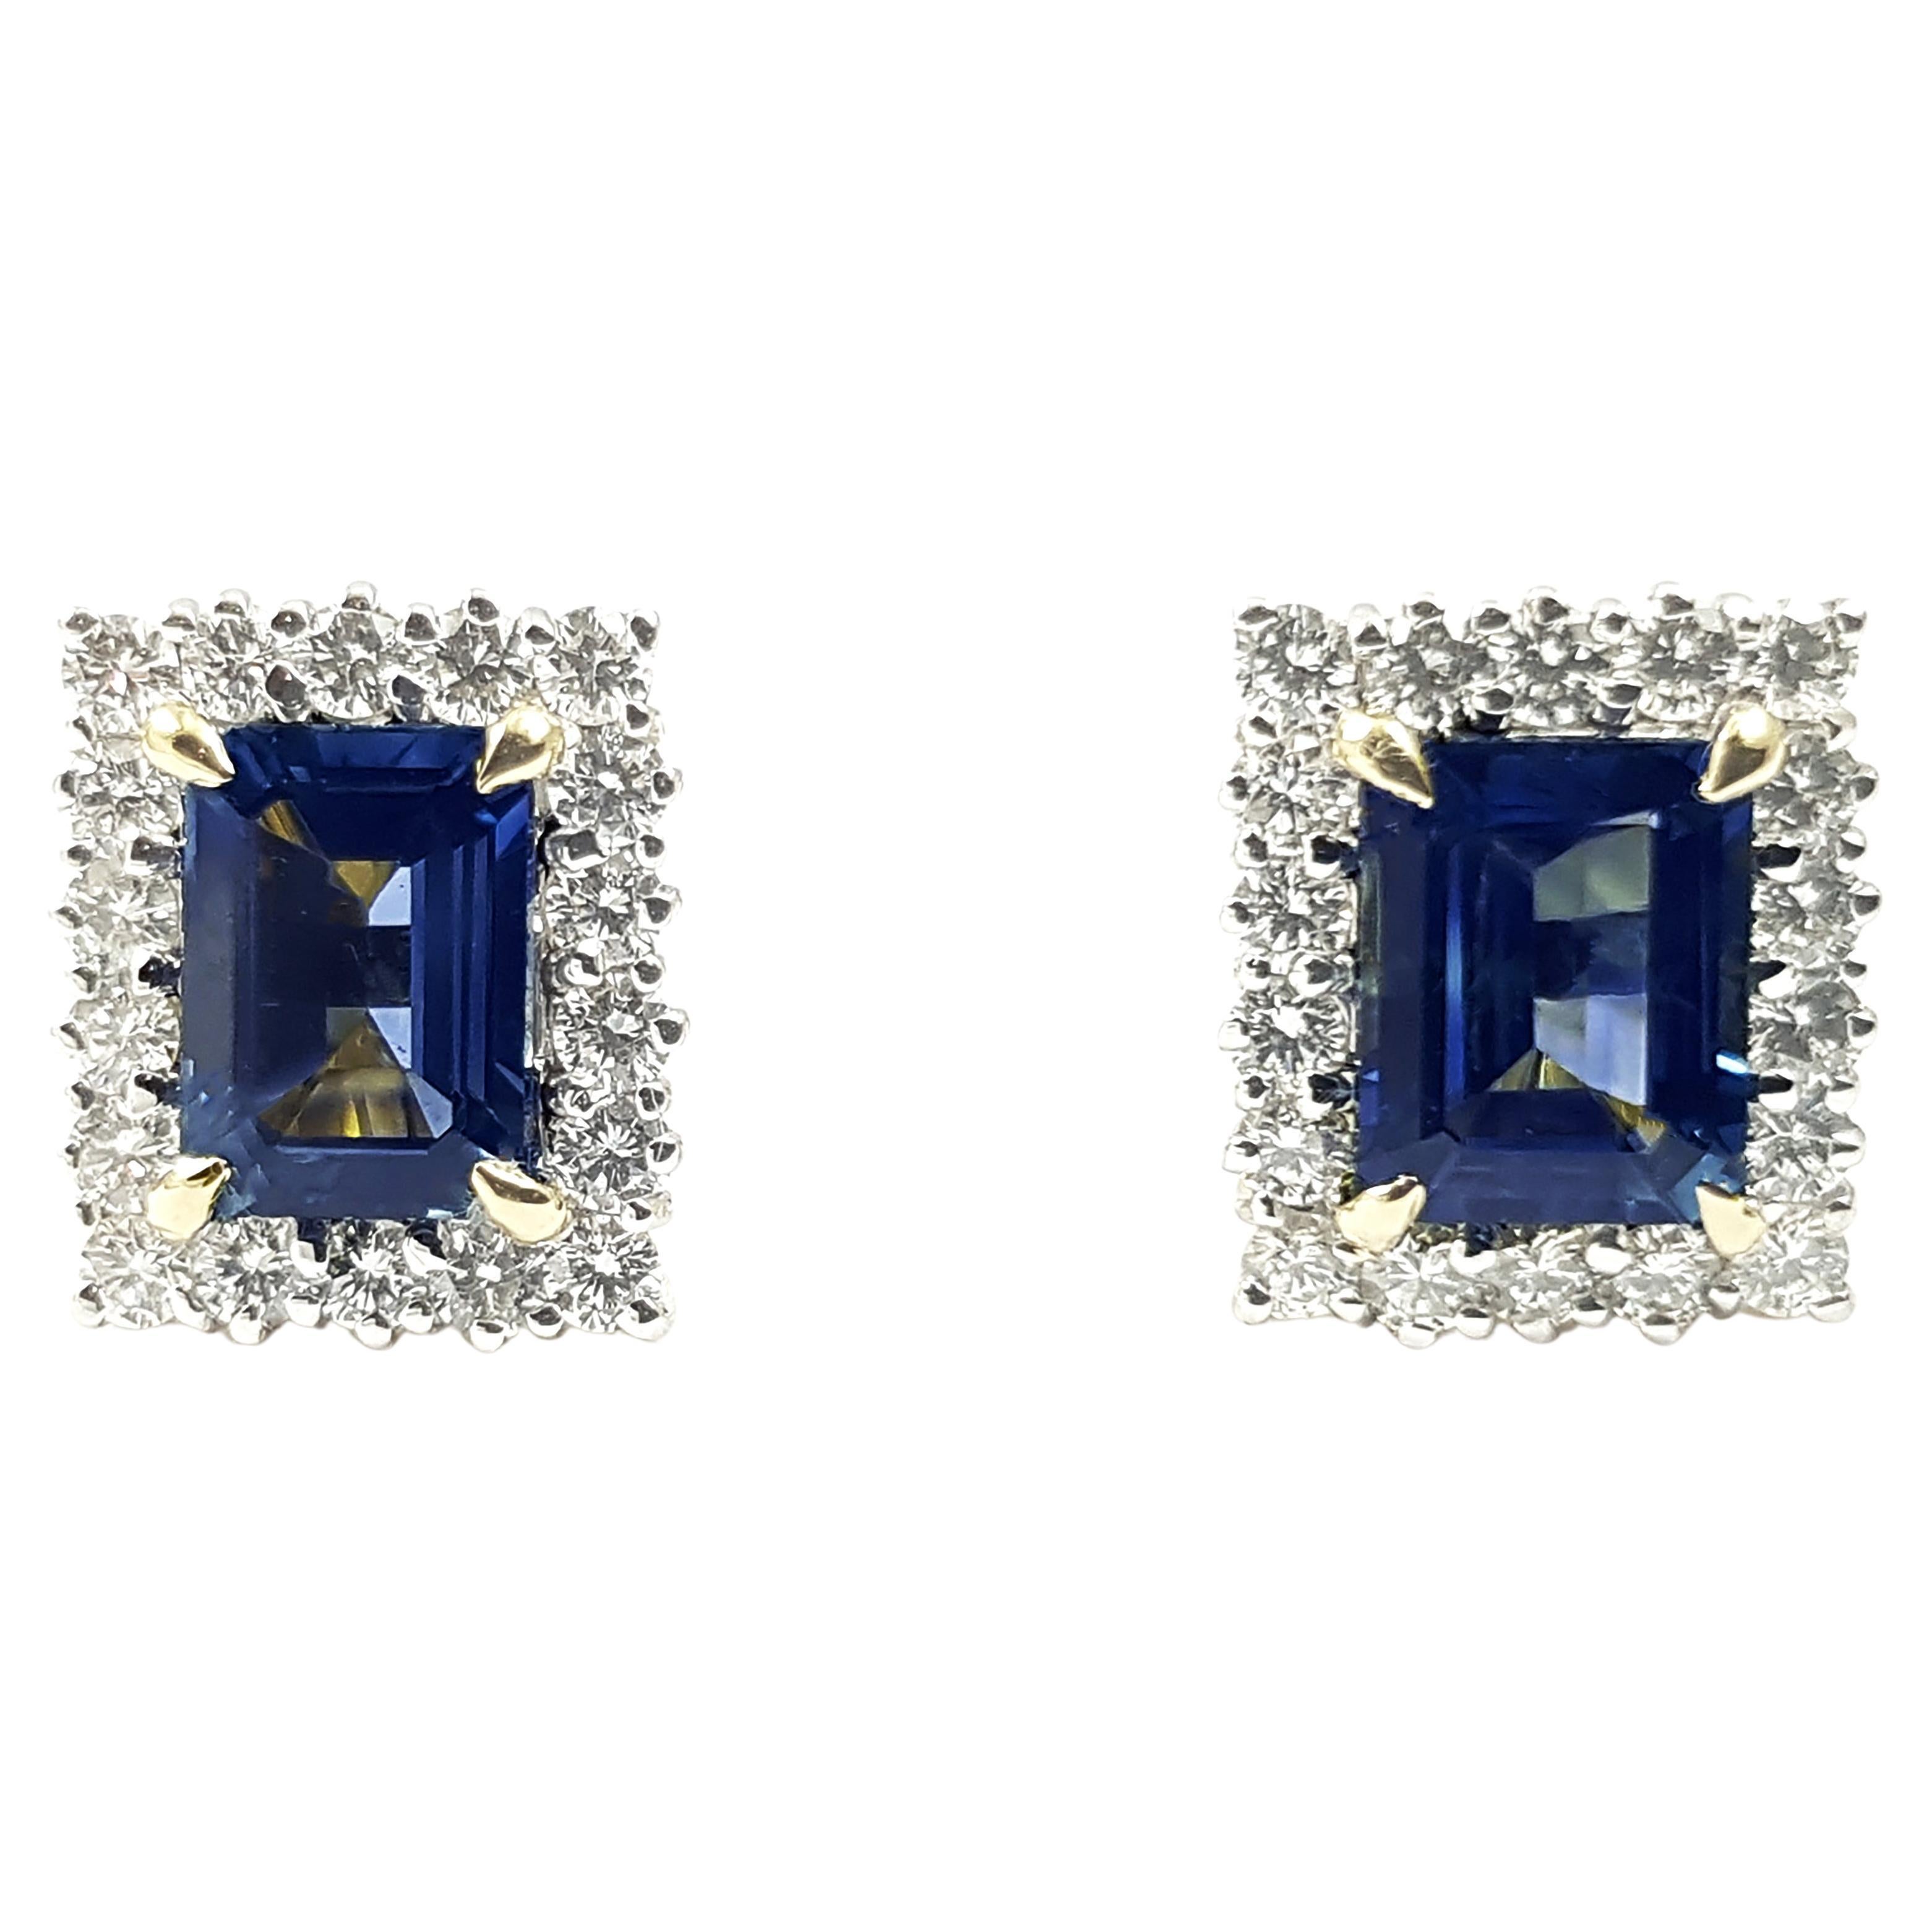 Emerald Cut Blue Sapphire with Diamond Earrings Set in 18 Karat Gold Settings